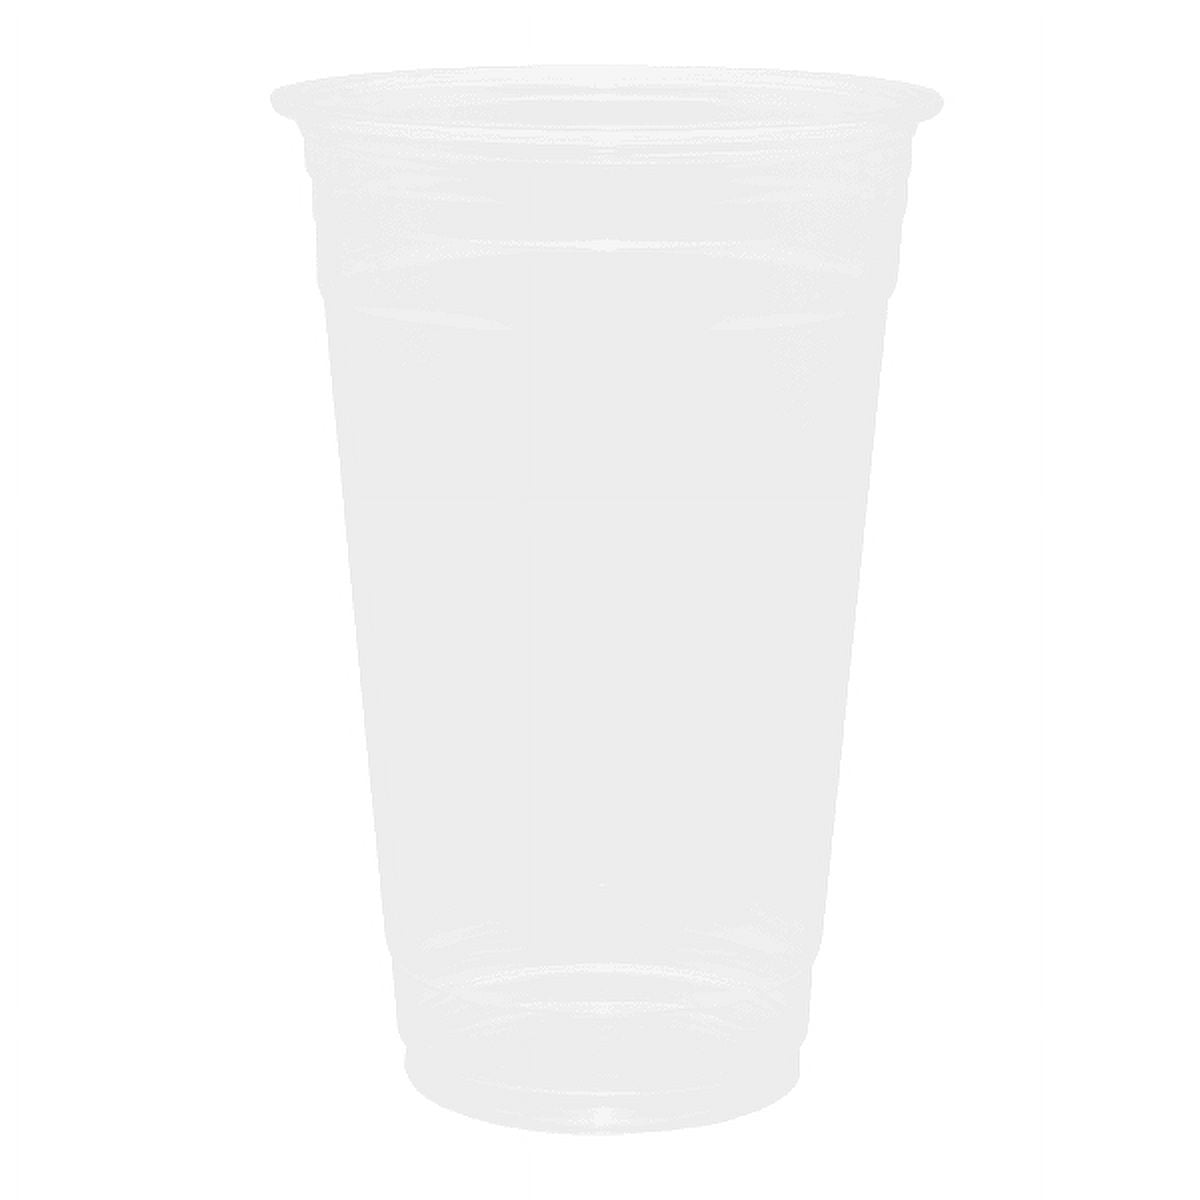 Plastic Cups - 24oz Pet Cold Cups (98mm) - 600 ct, No Lids